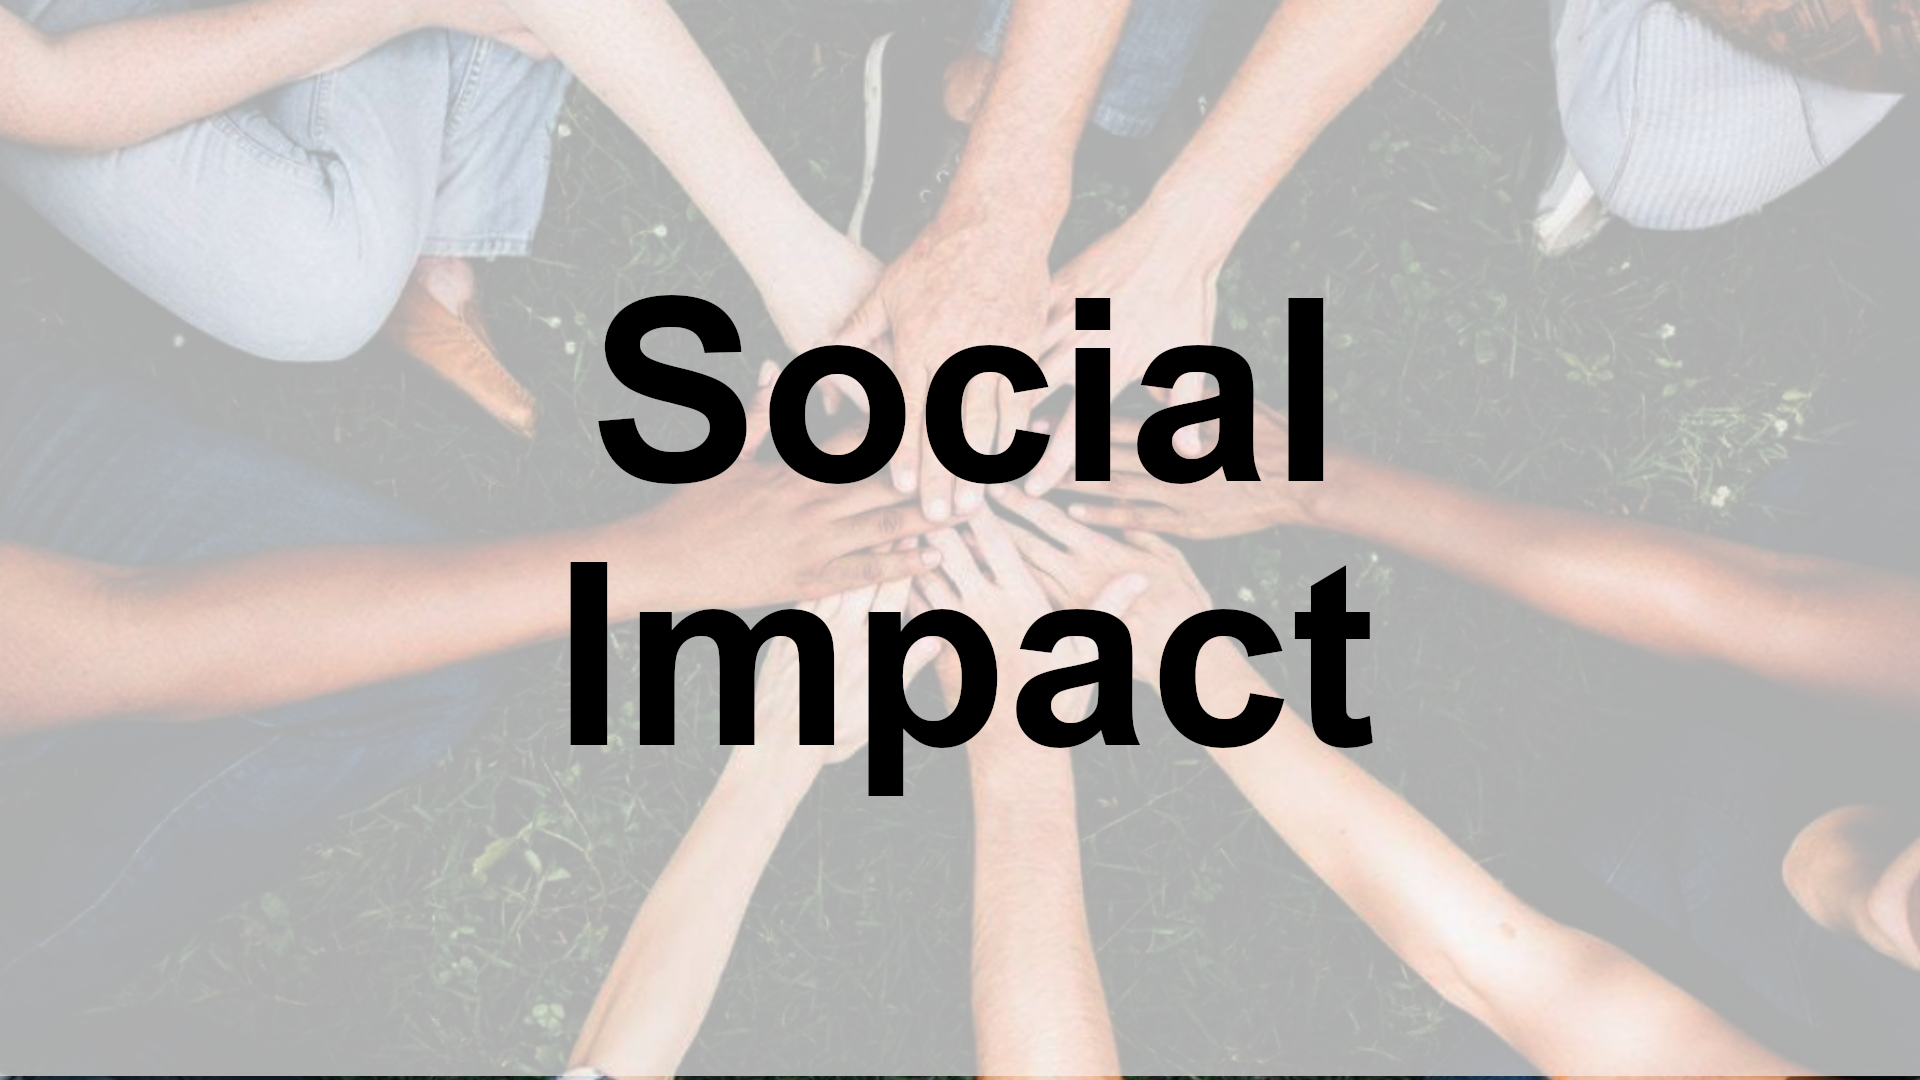 Costa Rica Social Impact News